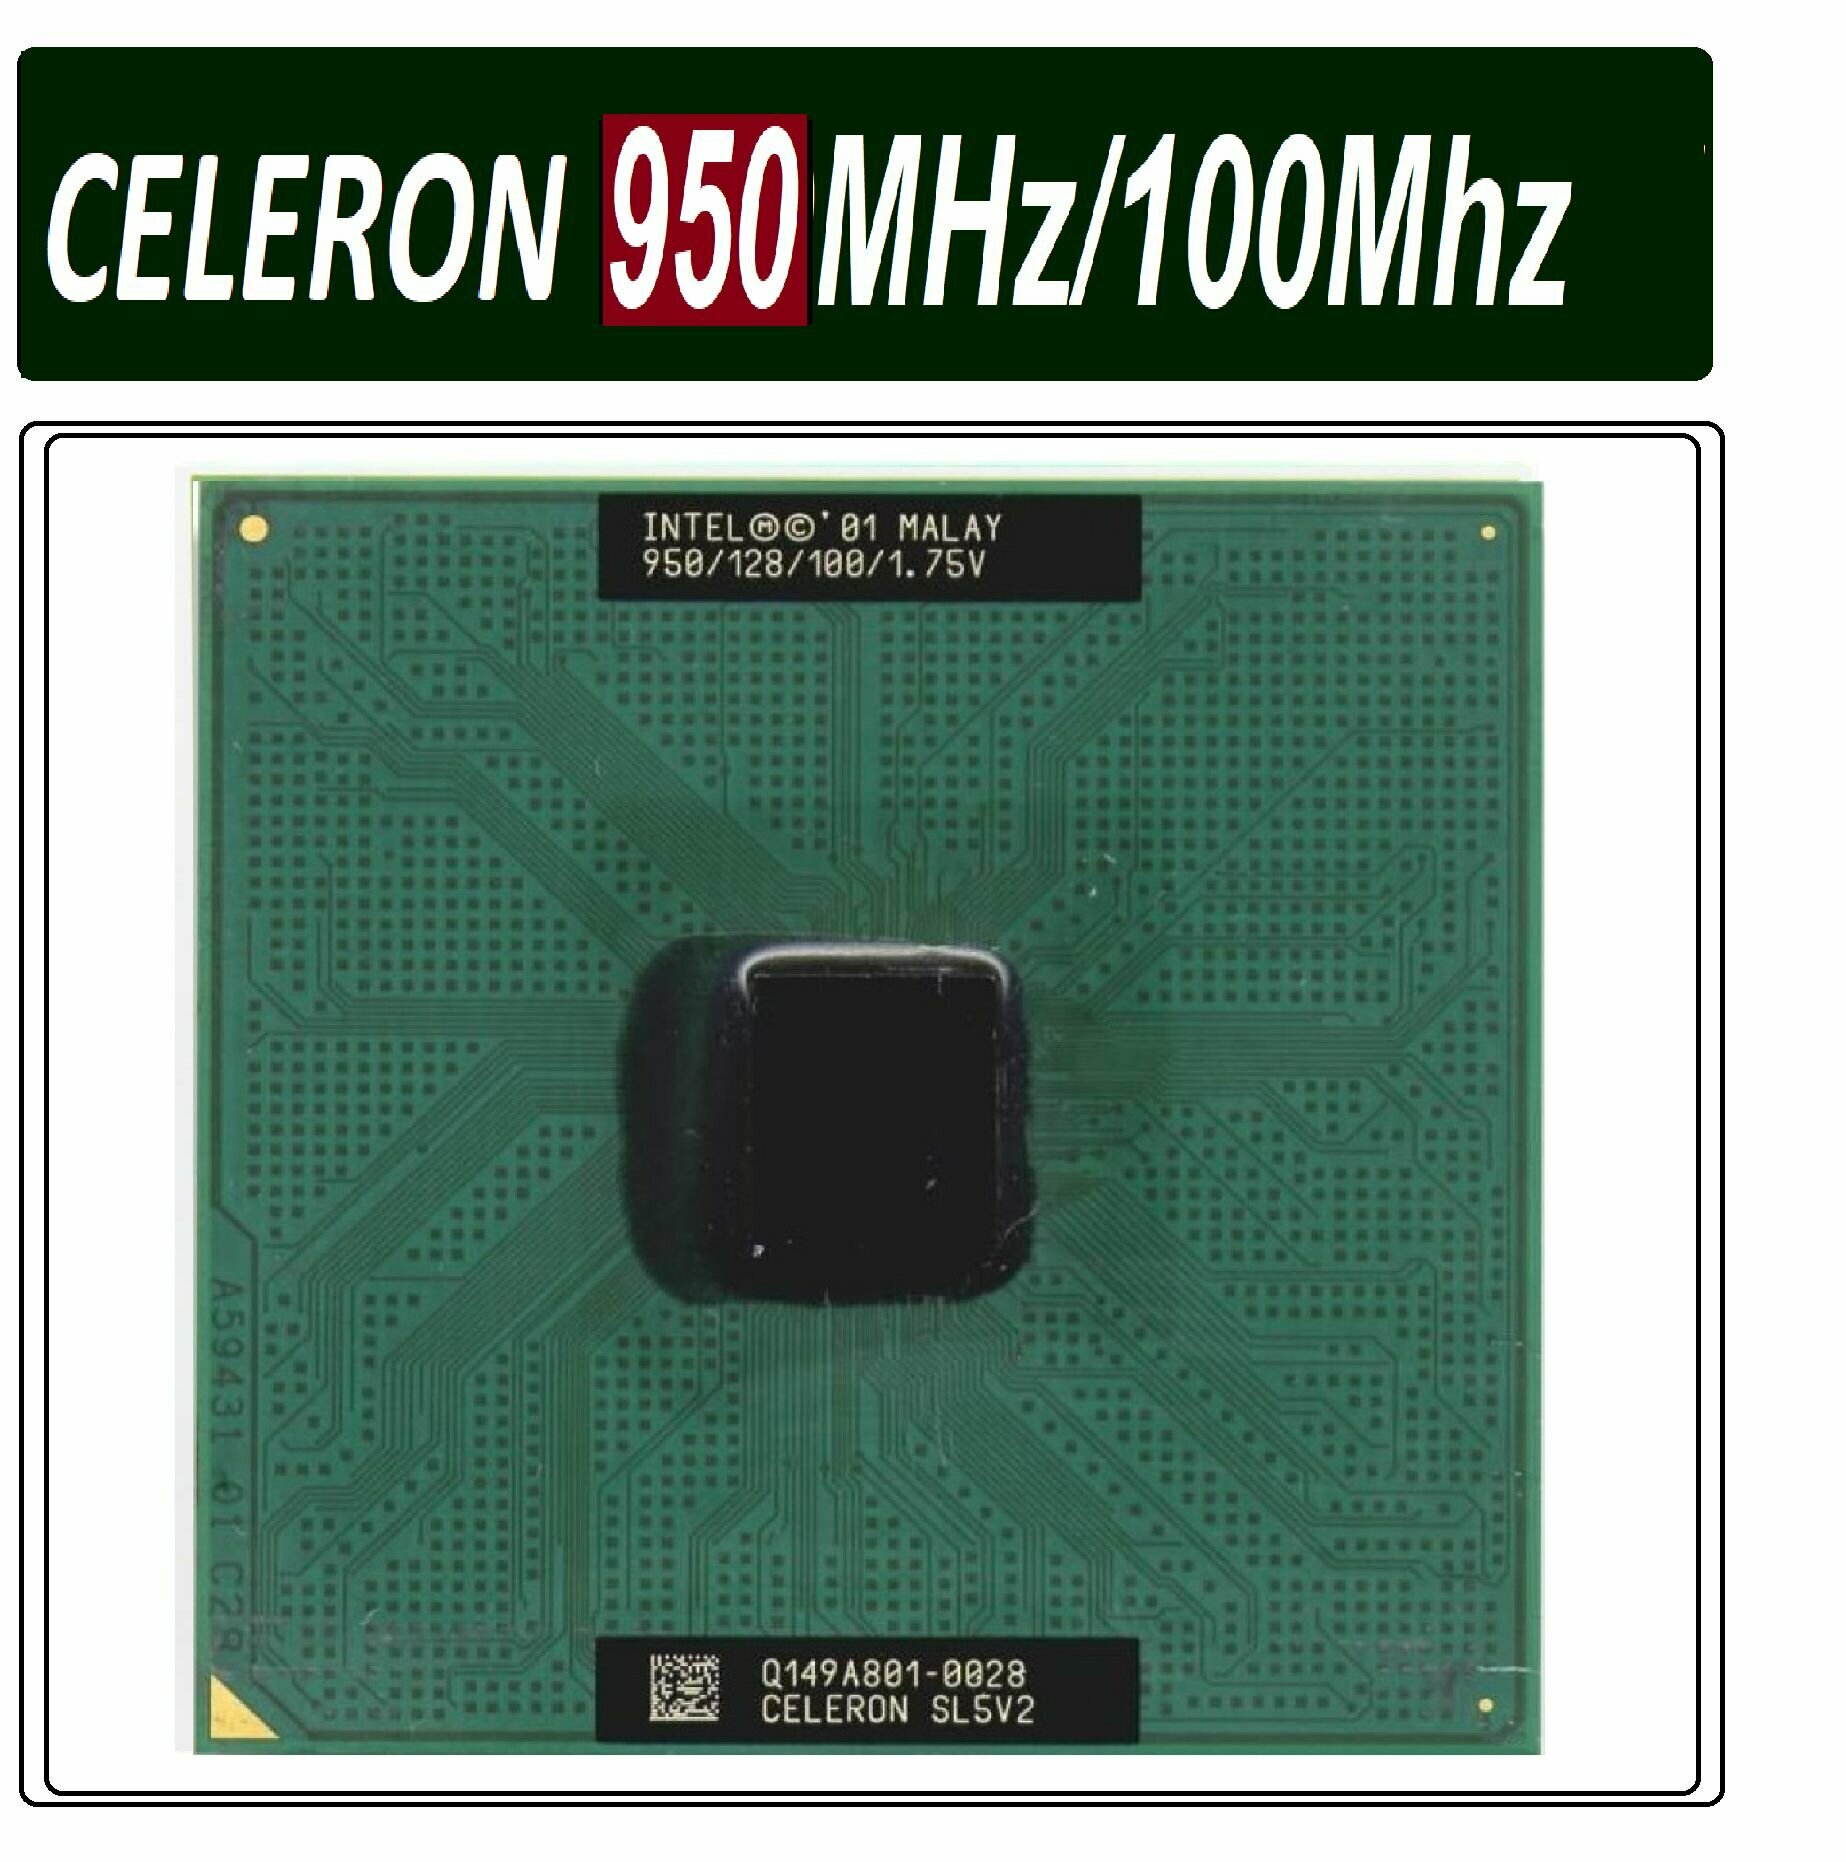 Intel Celeron 950 MHz / 100 MHz CopperMine PGA370 OEM, 950 МГц (100) ОЕМ версия